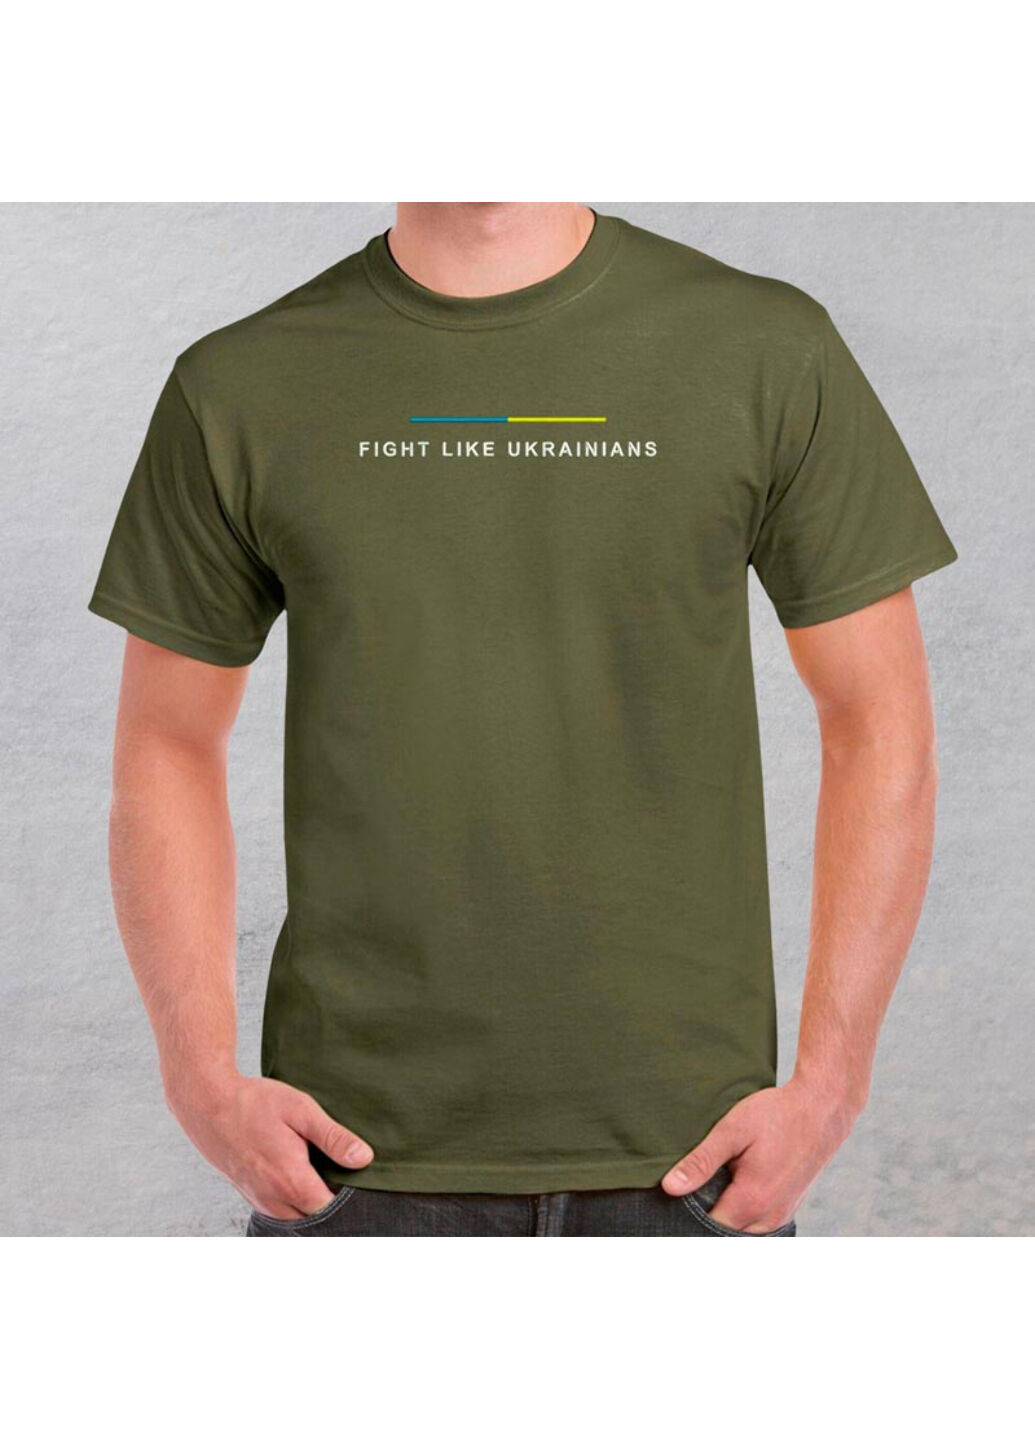 Хаки (оливковая) футболка з вишивкою fight like ukranians 01-1 мужская хаки 2xl No Brand